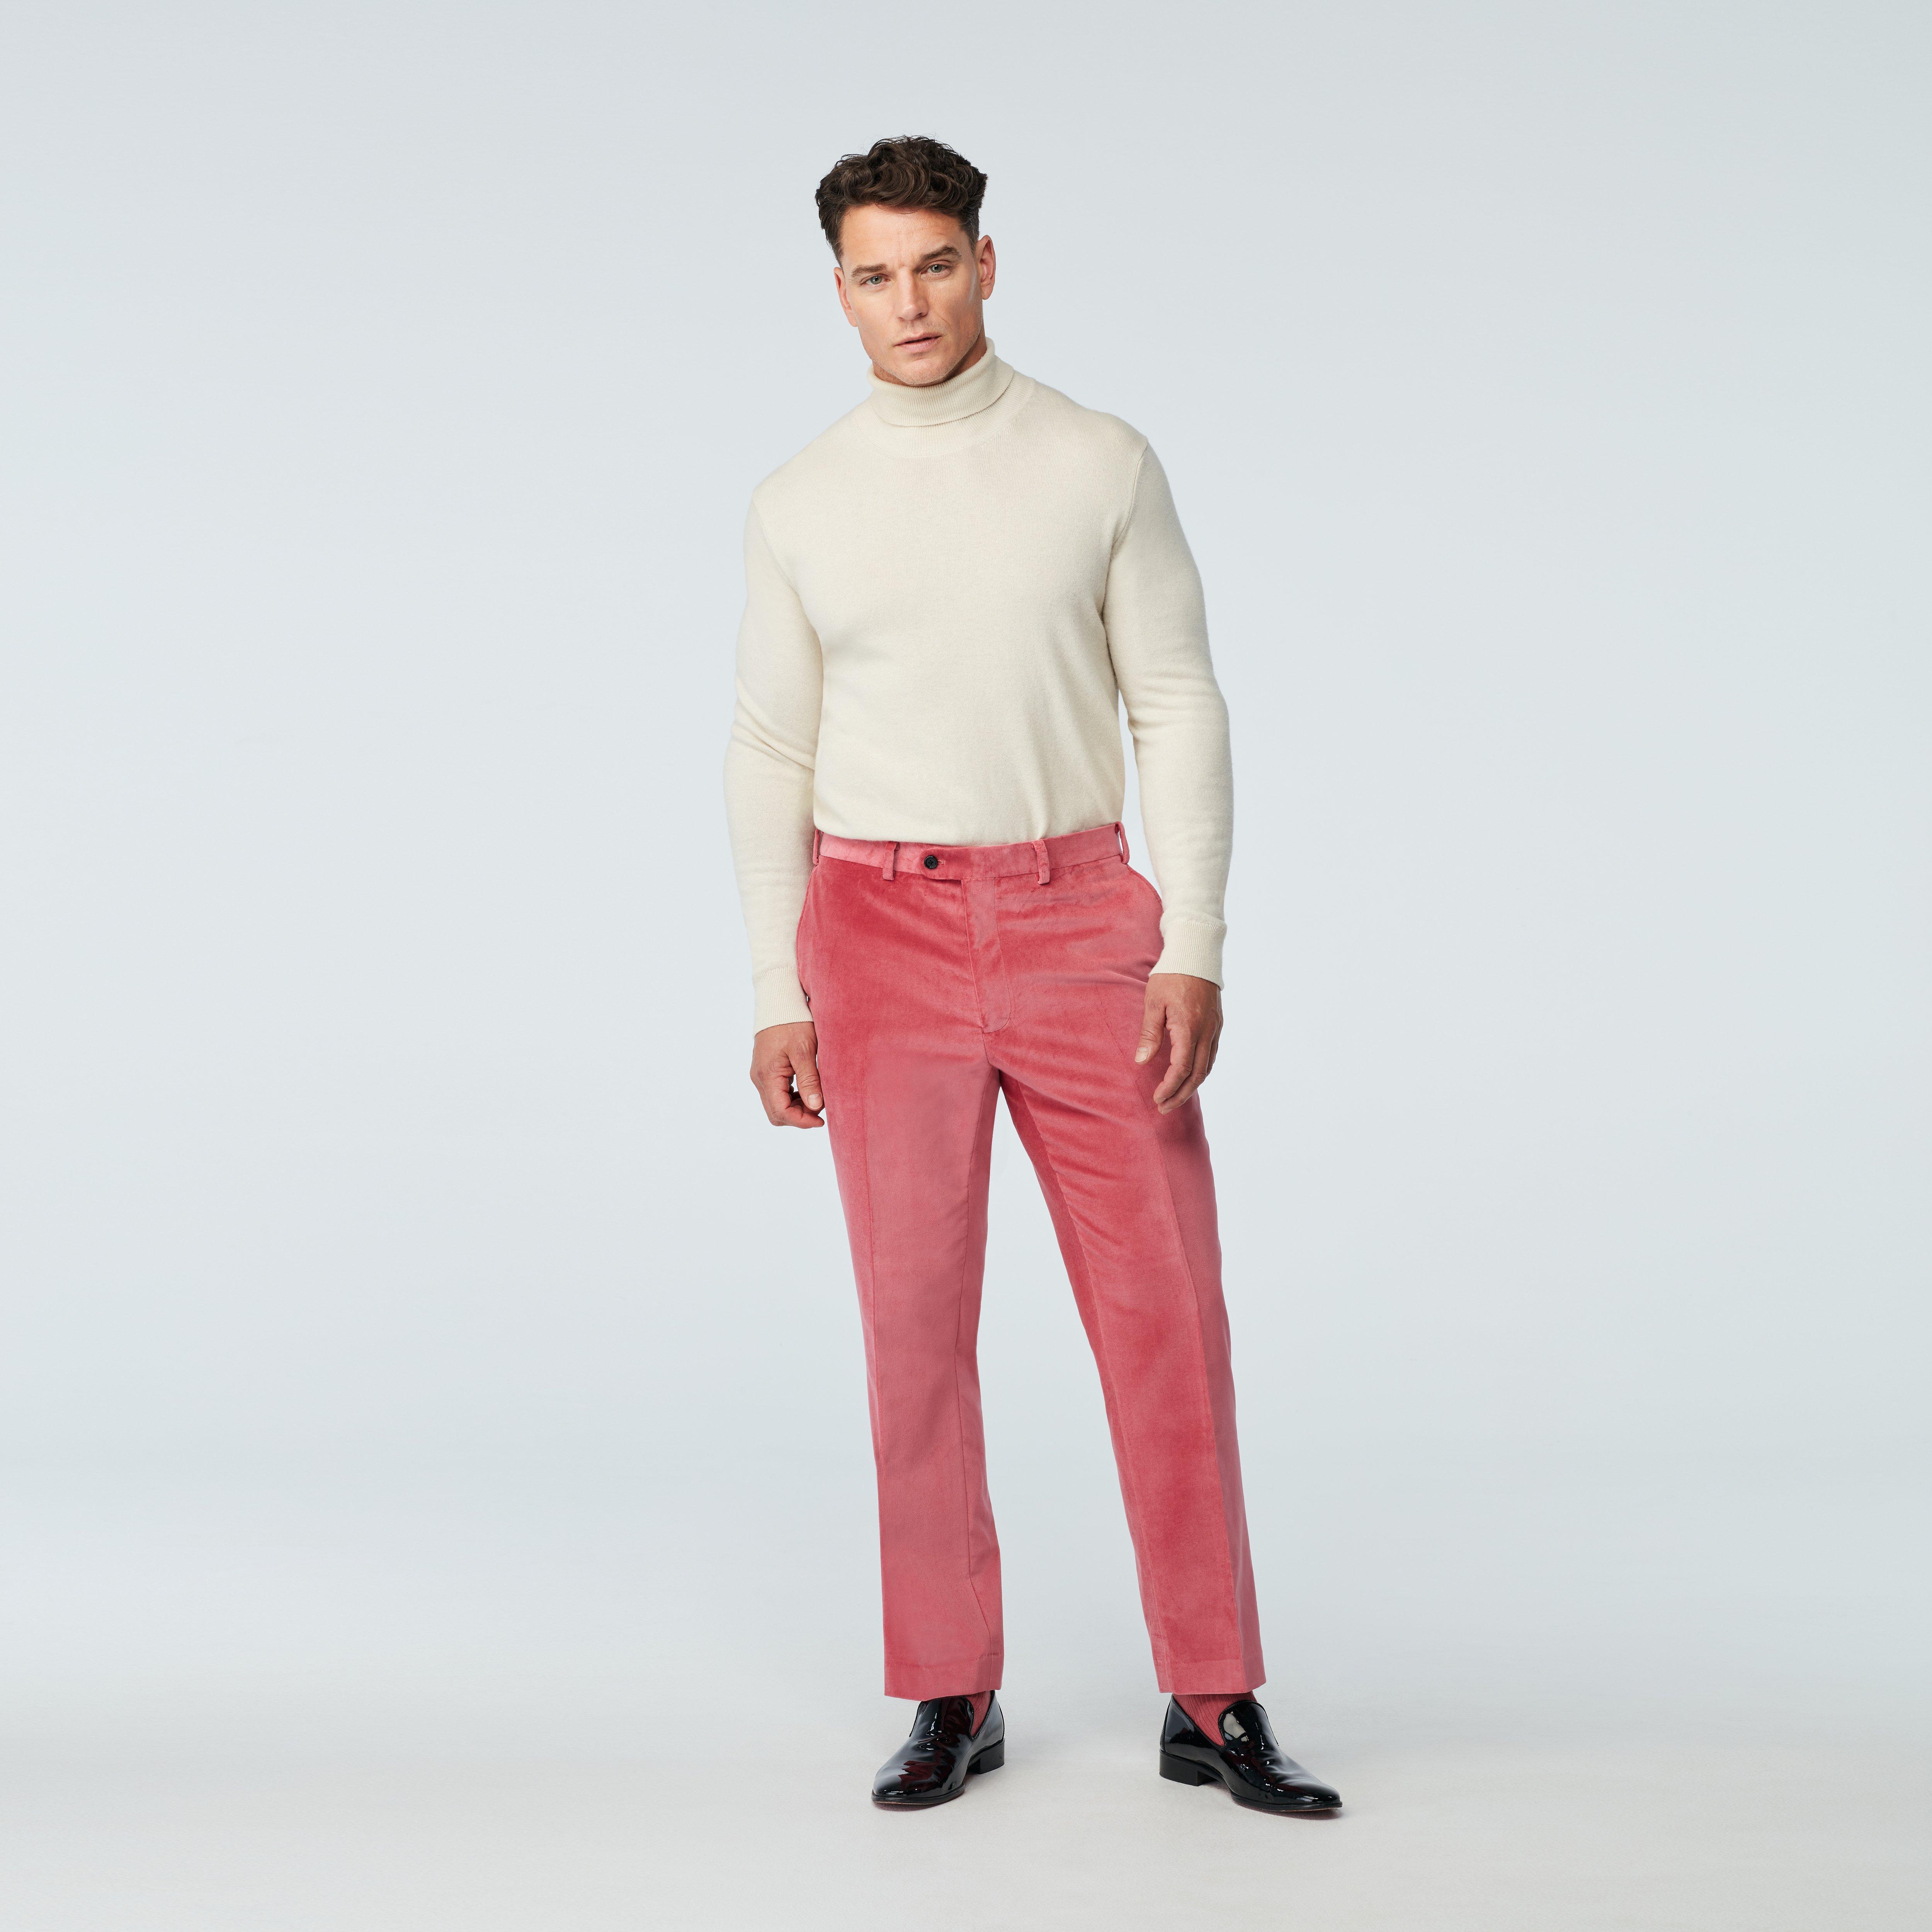 💗💗💗 | Pants outfit men, Pink shirt men, Mens fashion casual outfits